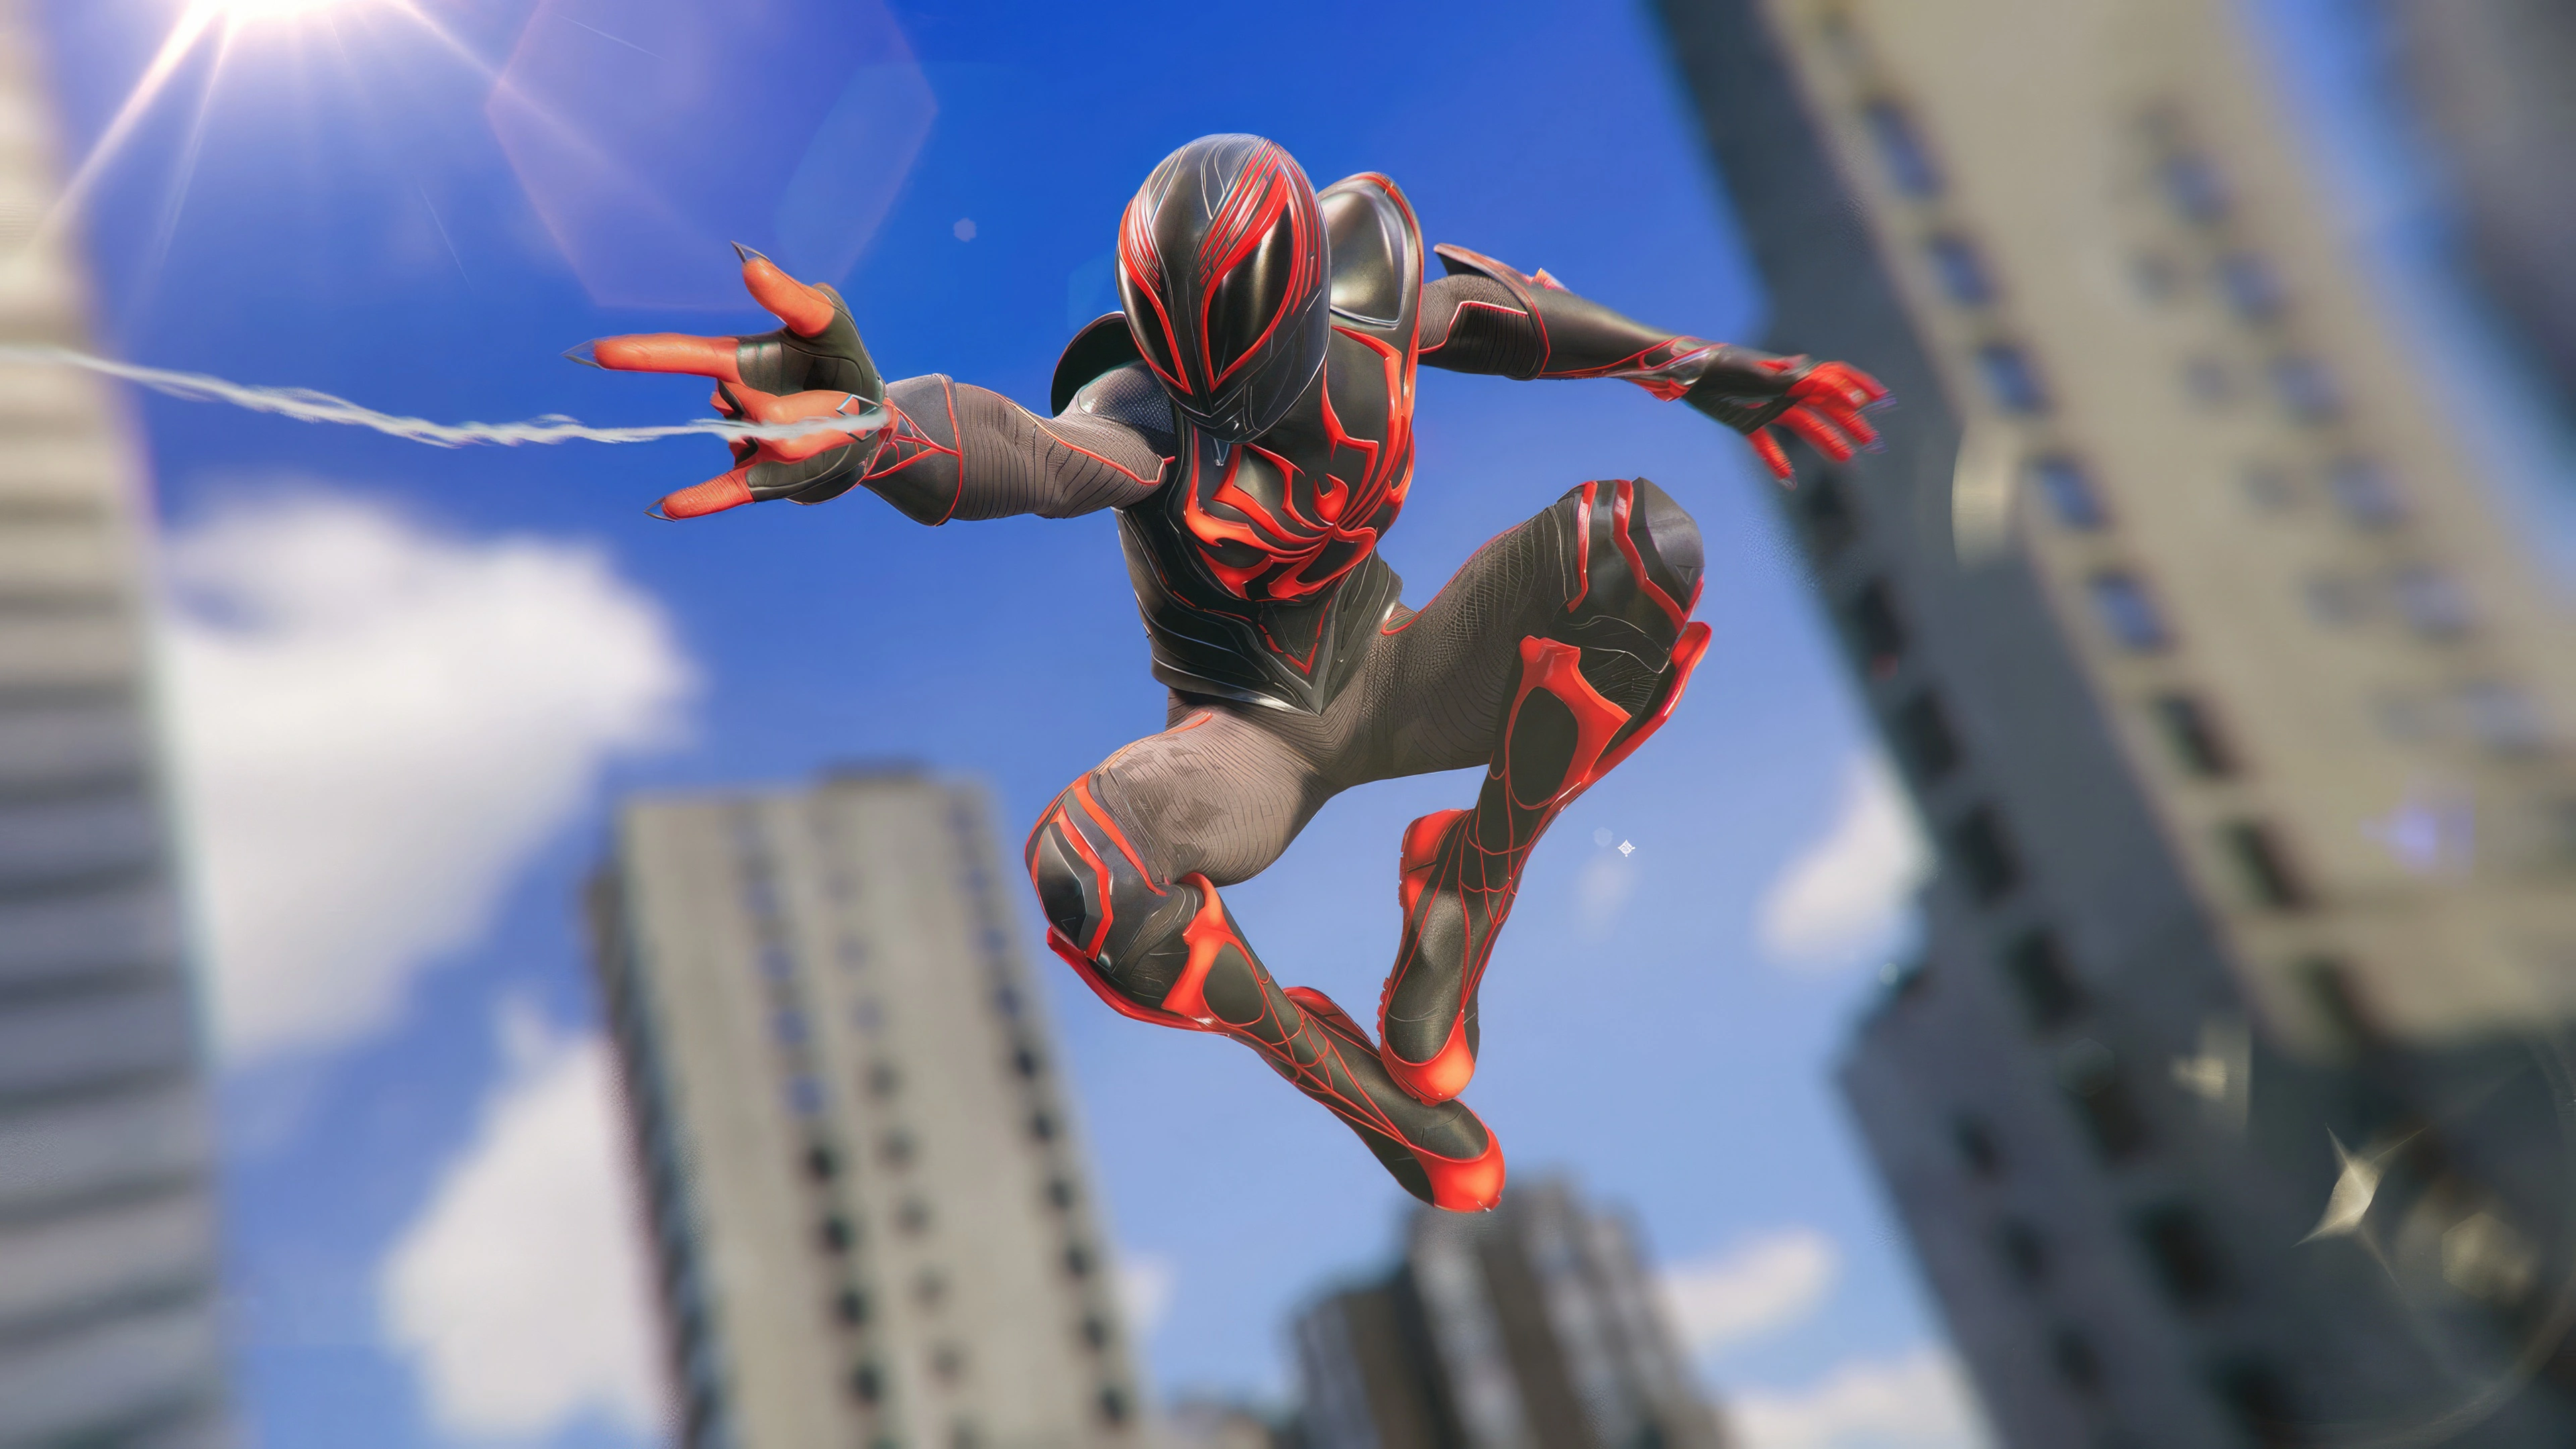 marvels spider man 2 red spectre suit wl.jpg